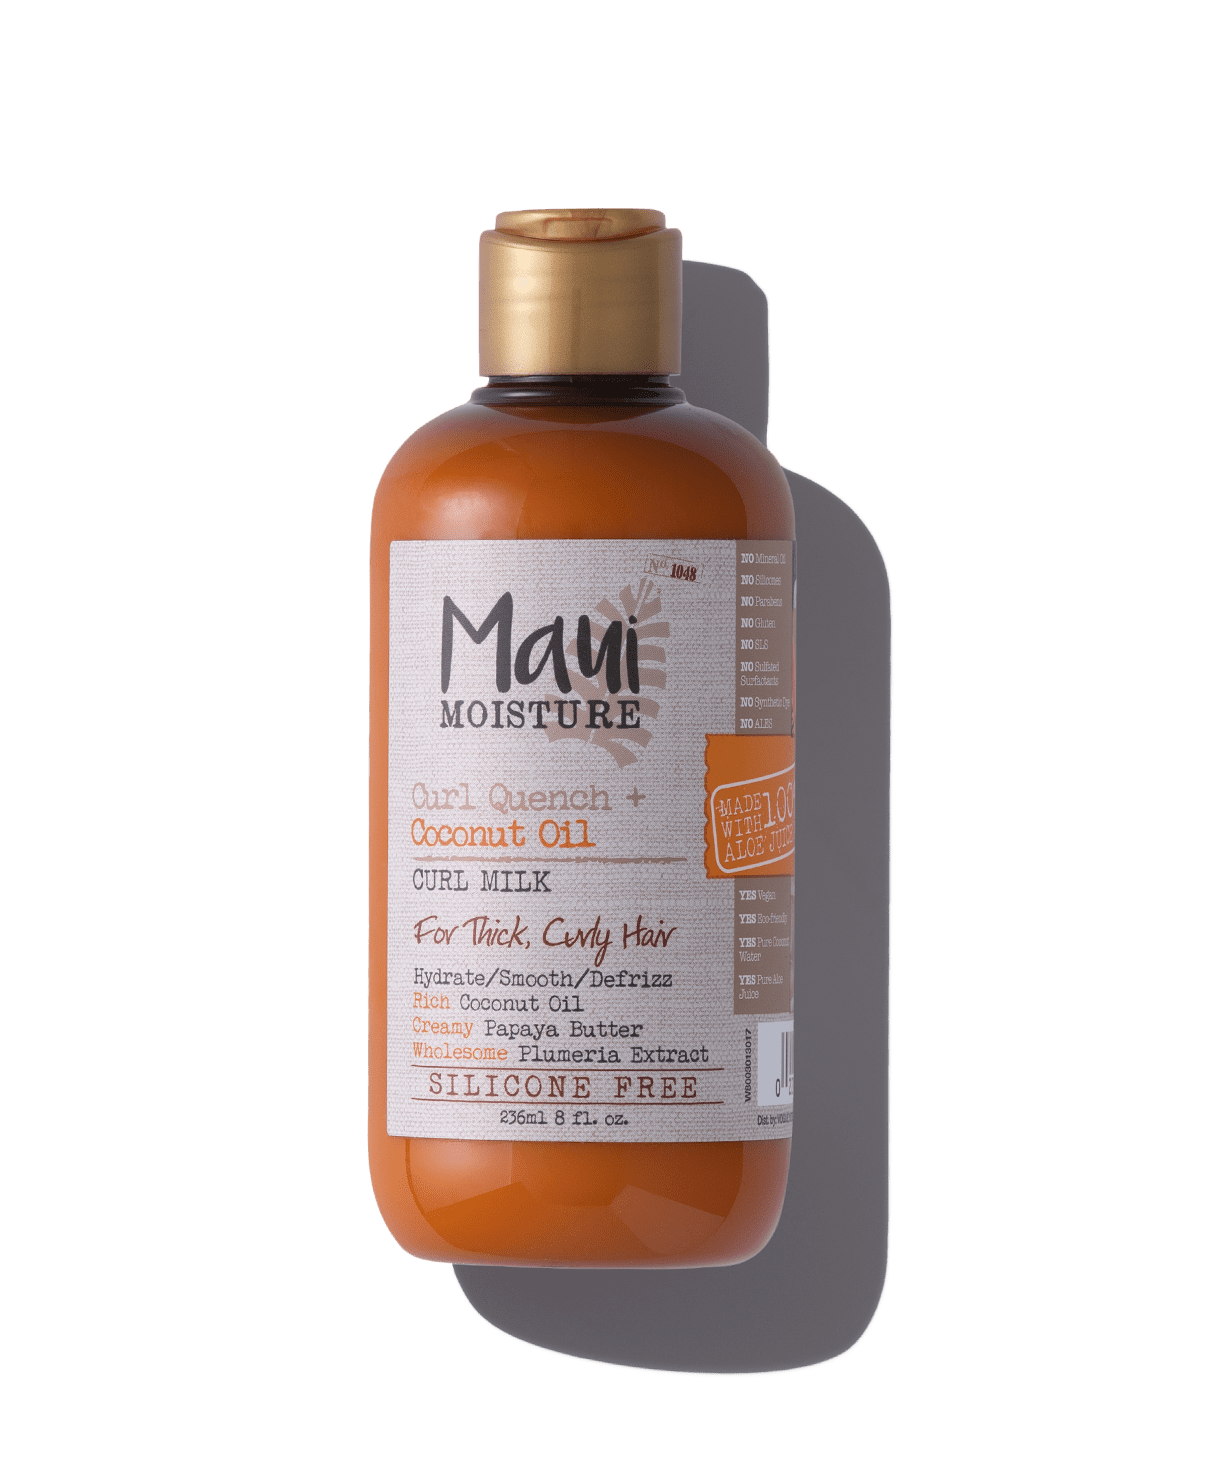 Maui Moisture Curl Quench + Coconut Oil Curl Milk 8oz